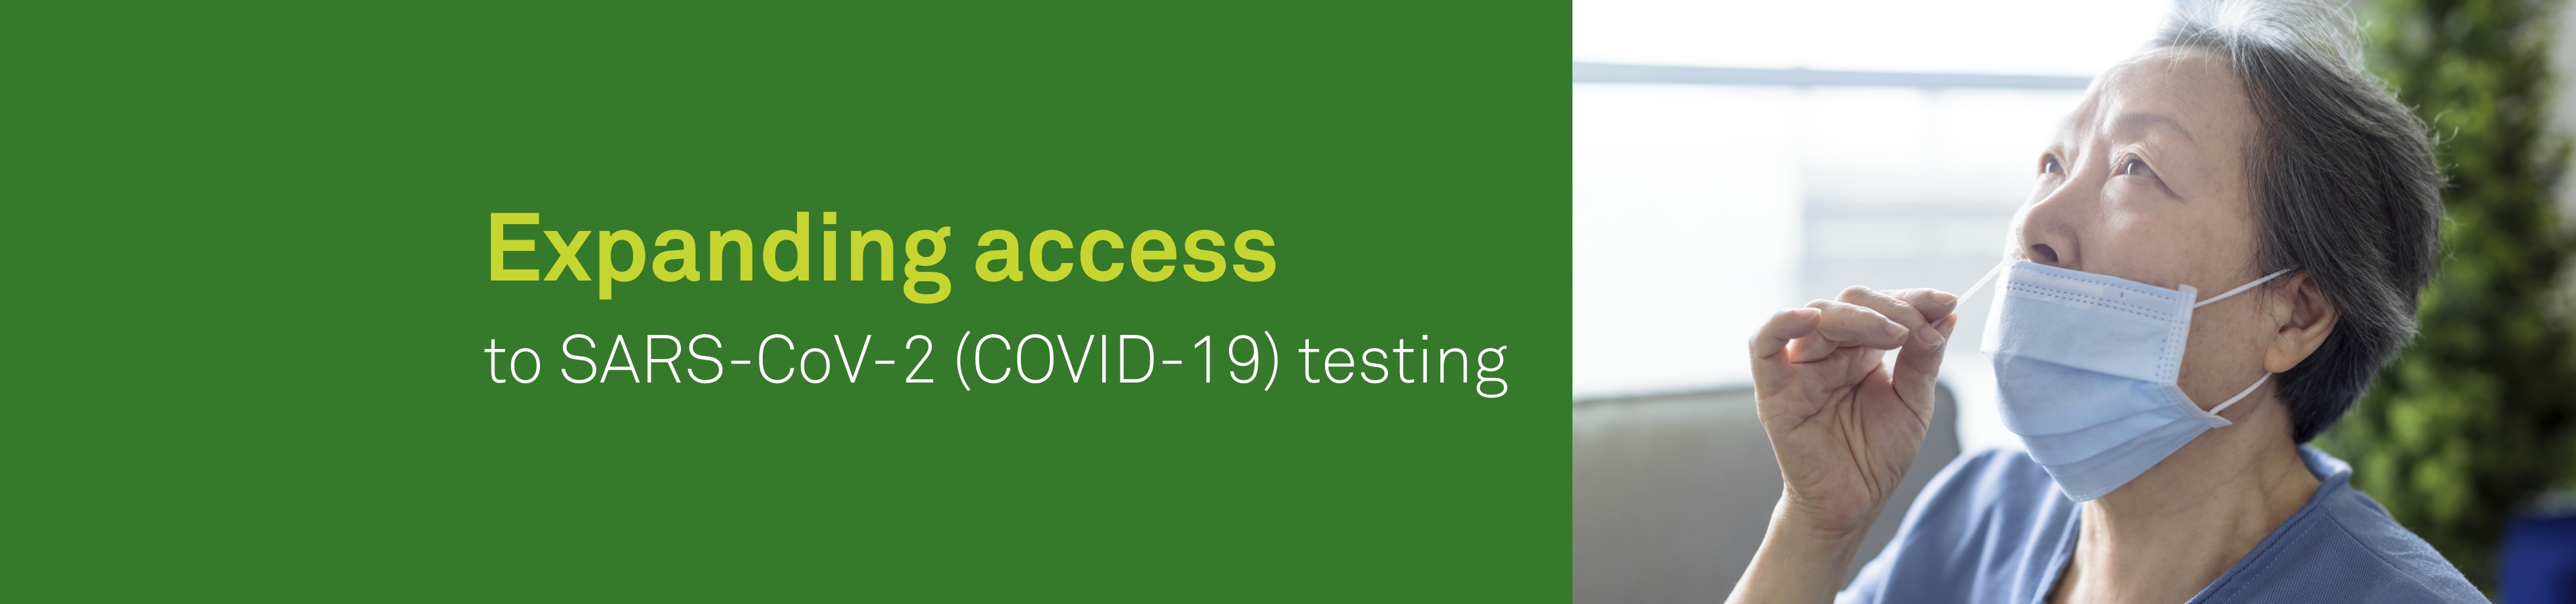 Expanding access to SARS-CoV-2 (COVID-19) testing